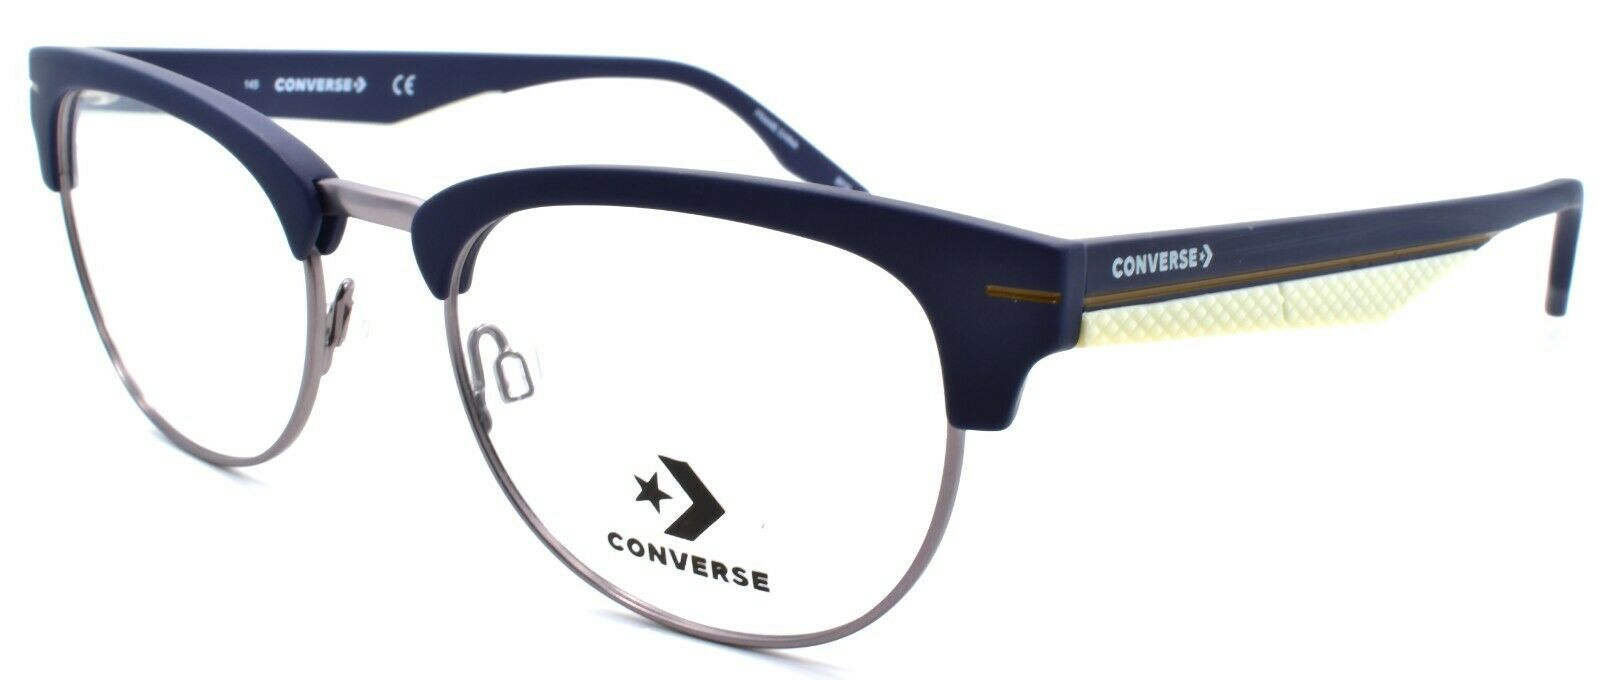 1-CONVERSE CV3006 411 Men's Eyeglasses Frames 52-20-145 Matte Obsidian-886895508070-IKSpecs